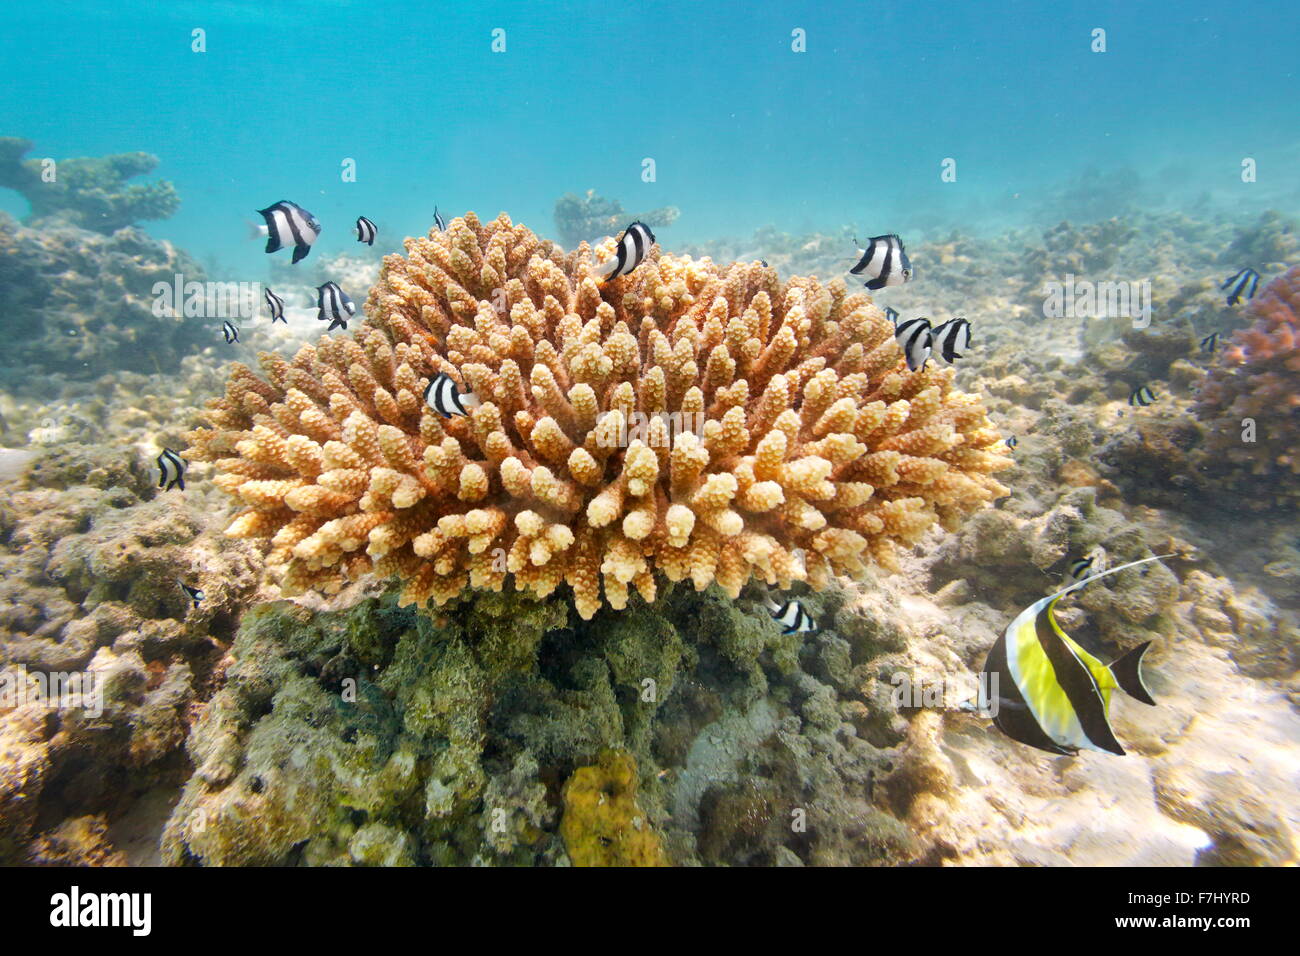 Malediven Insel - Korallen-Riff Stockfoto